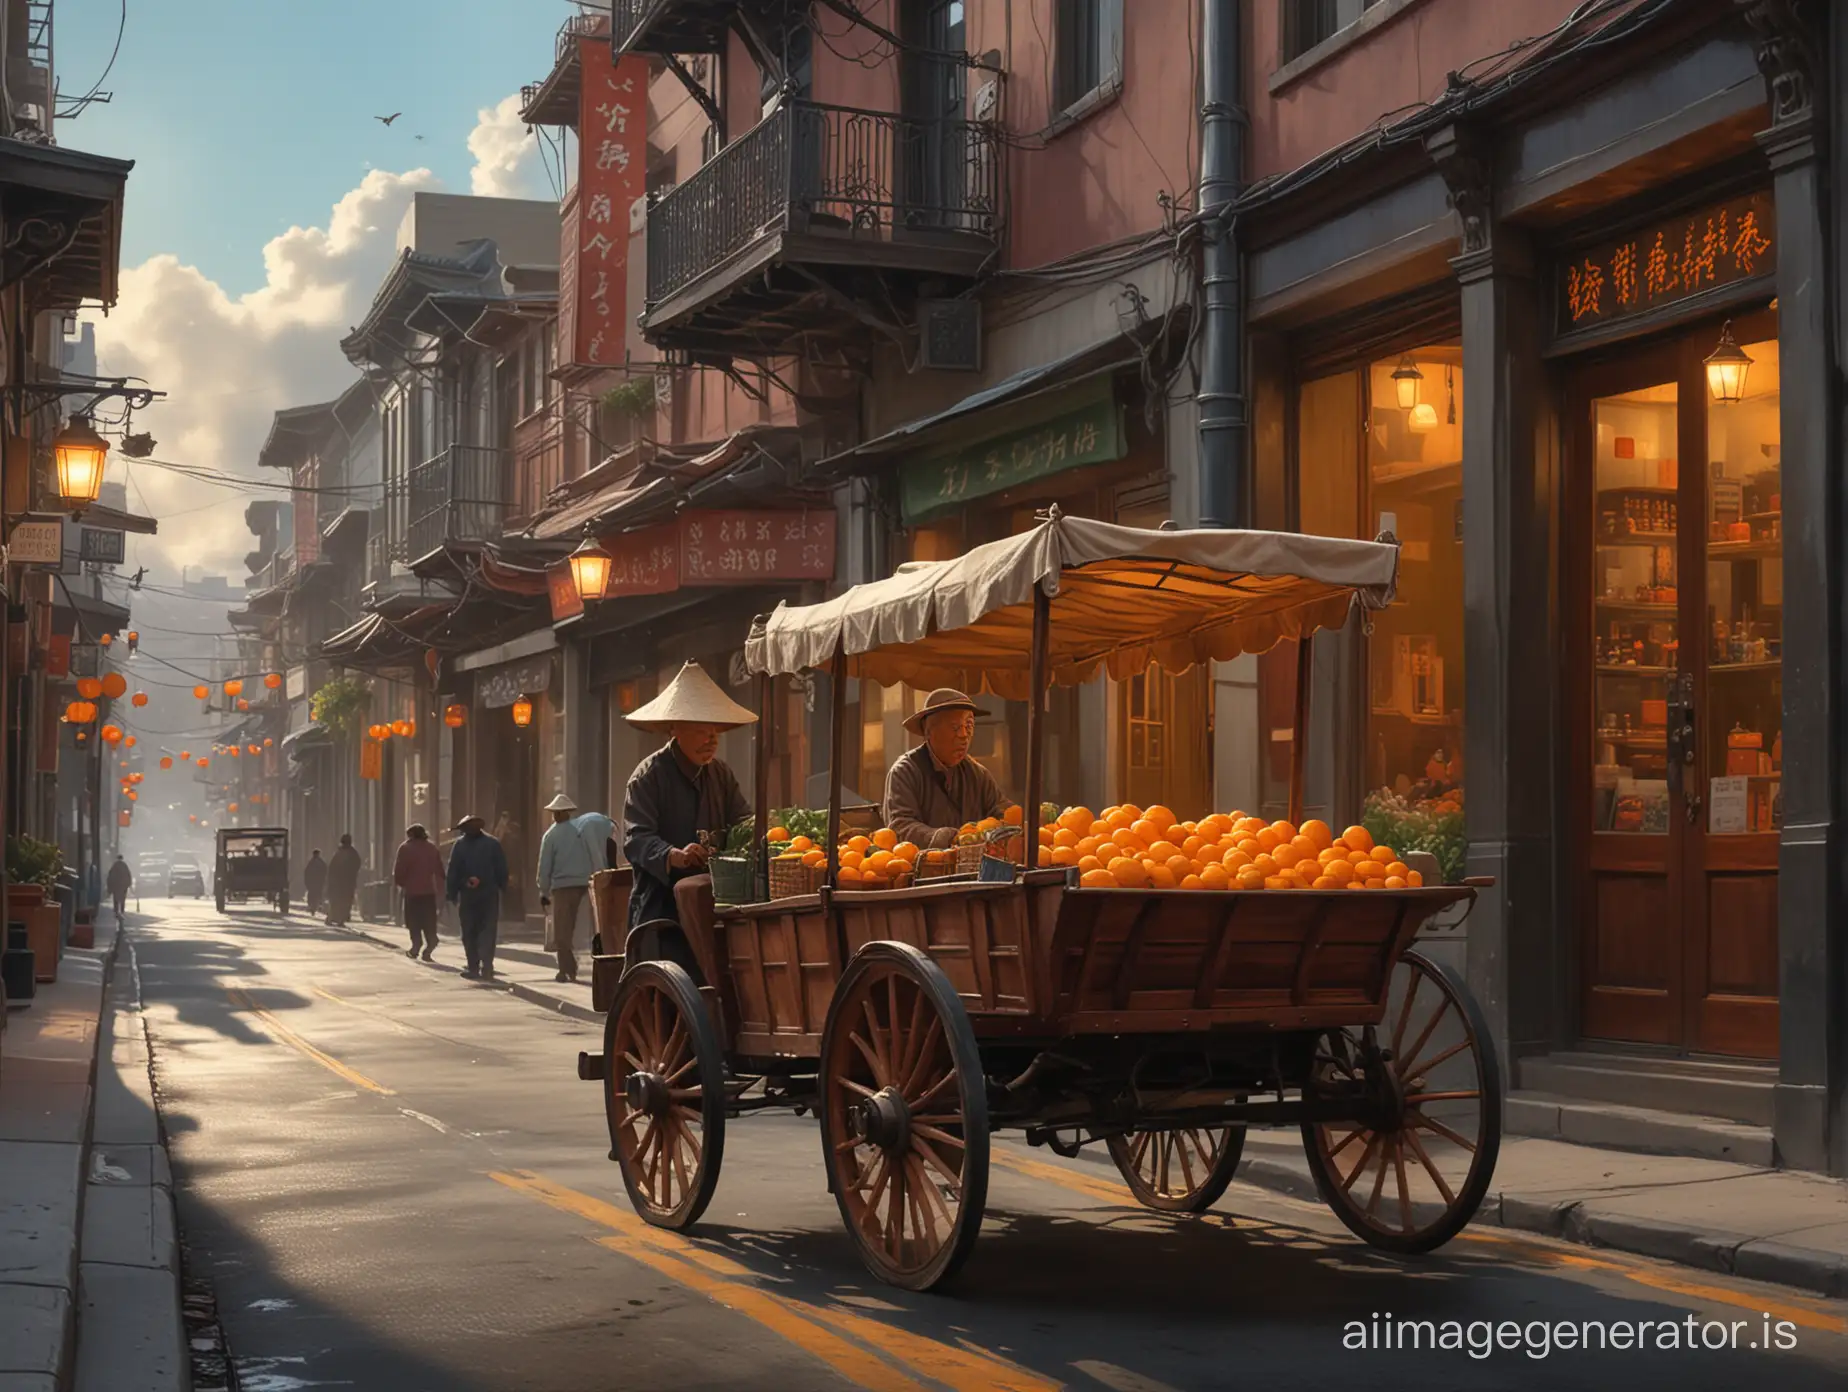 San-Francisco-Street-Merchant-Evening-Cart-of-Oranges-in-Winslow-Homer-Style